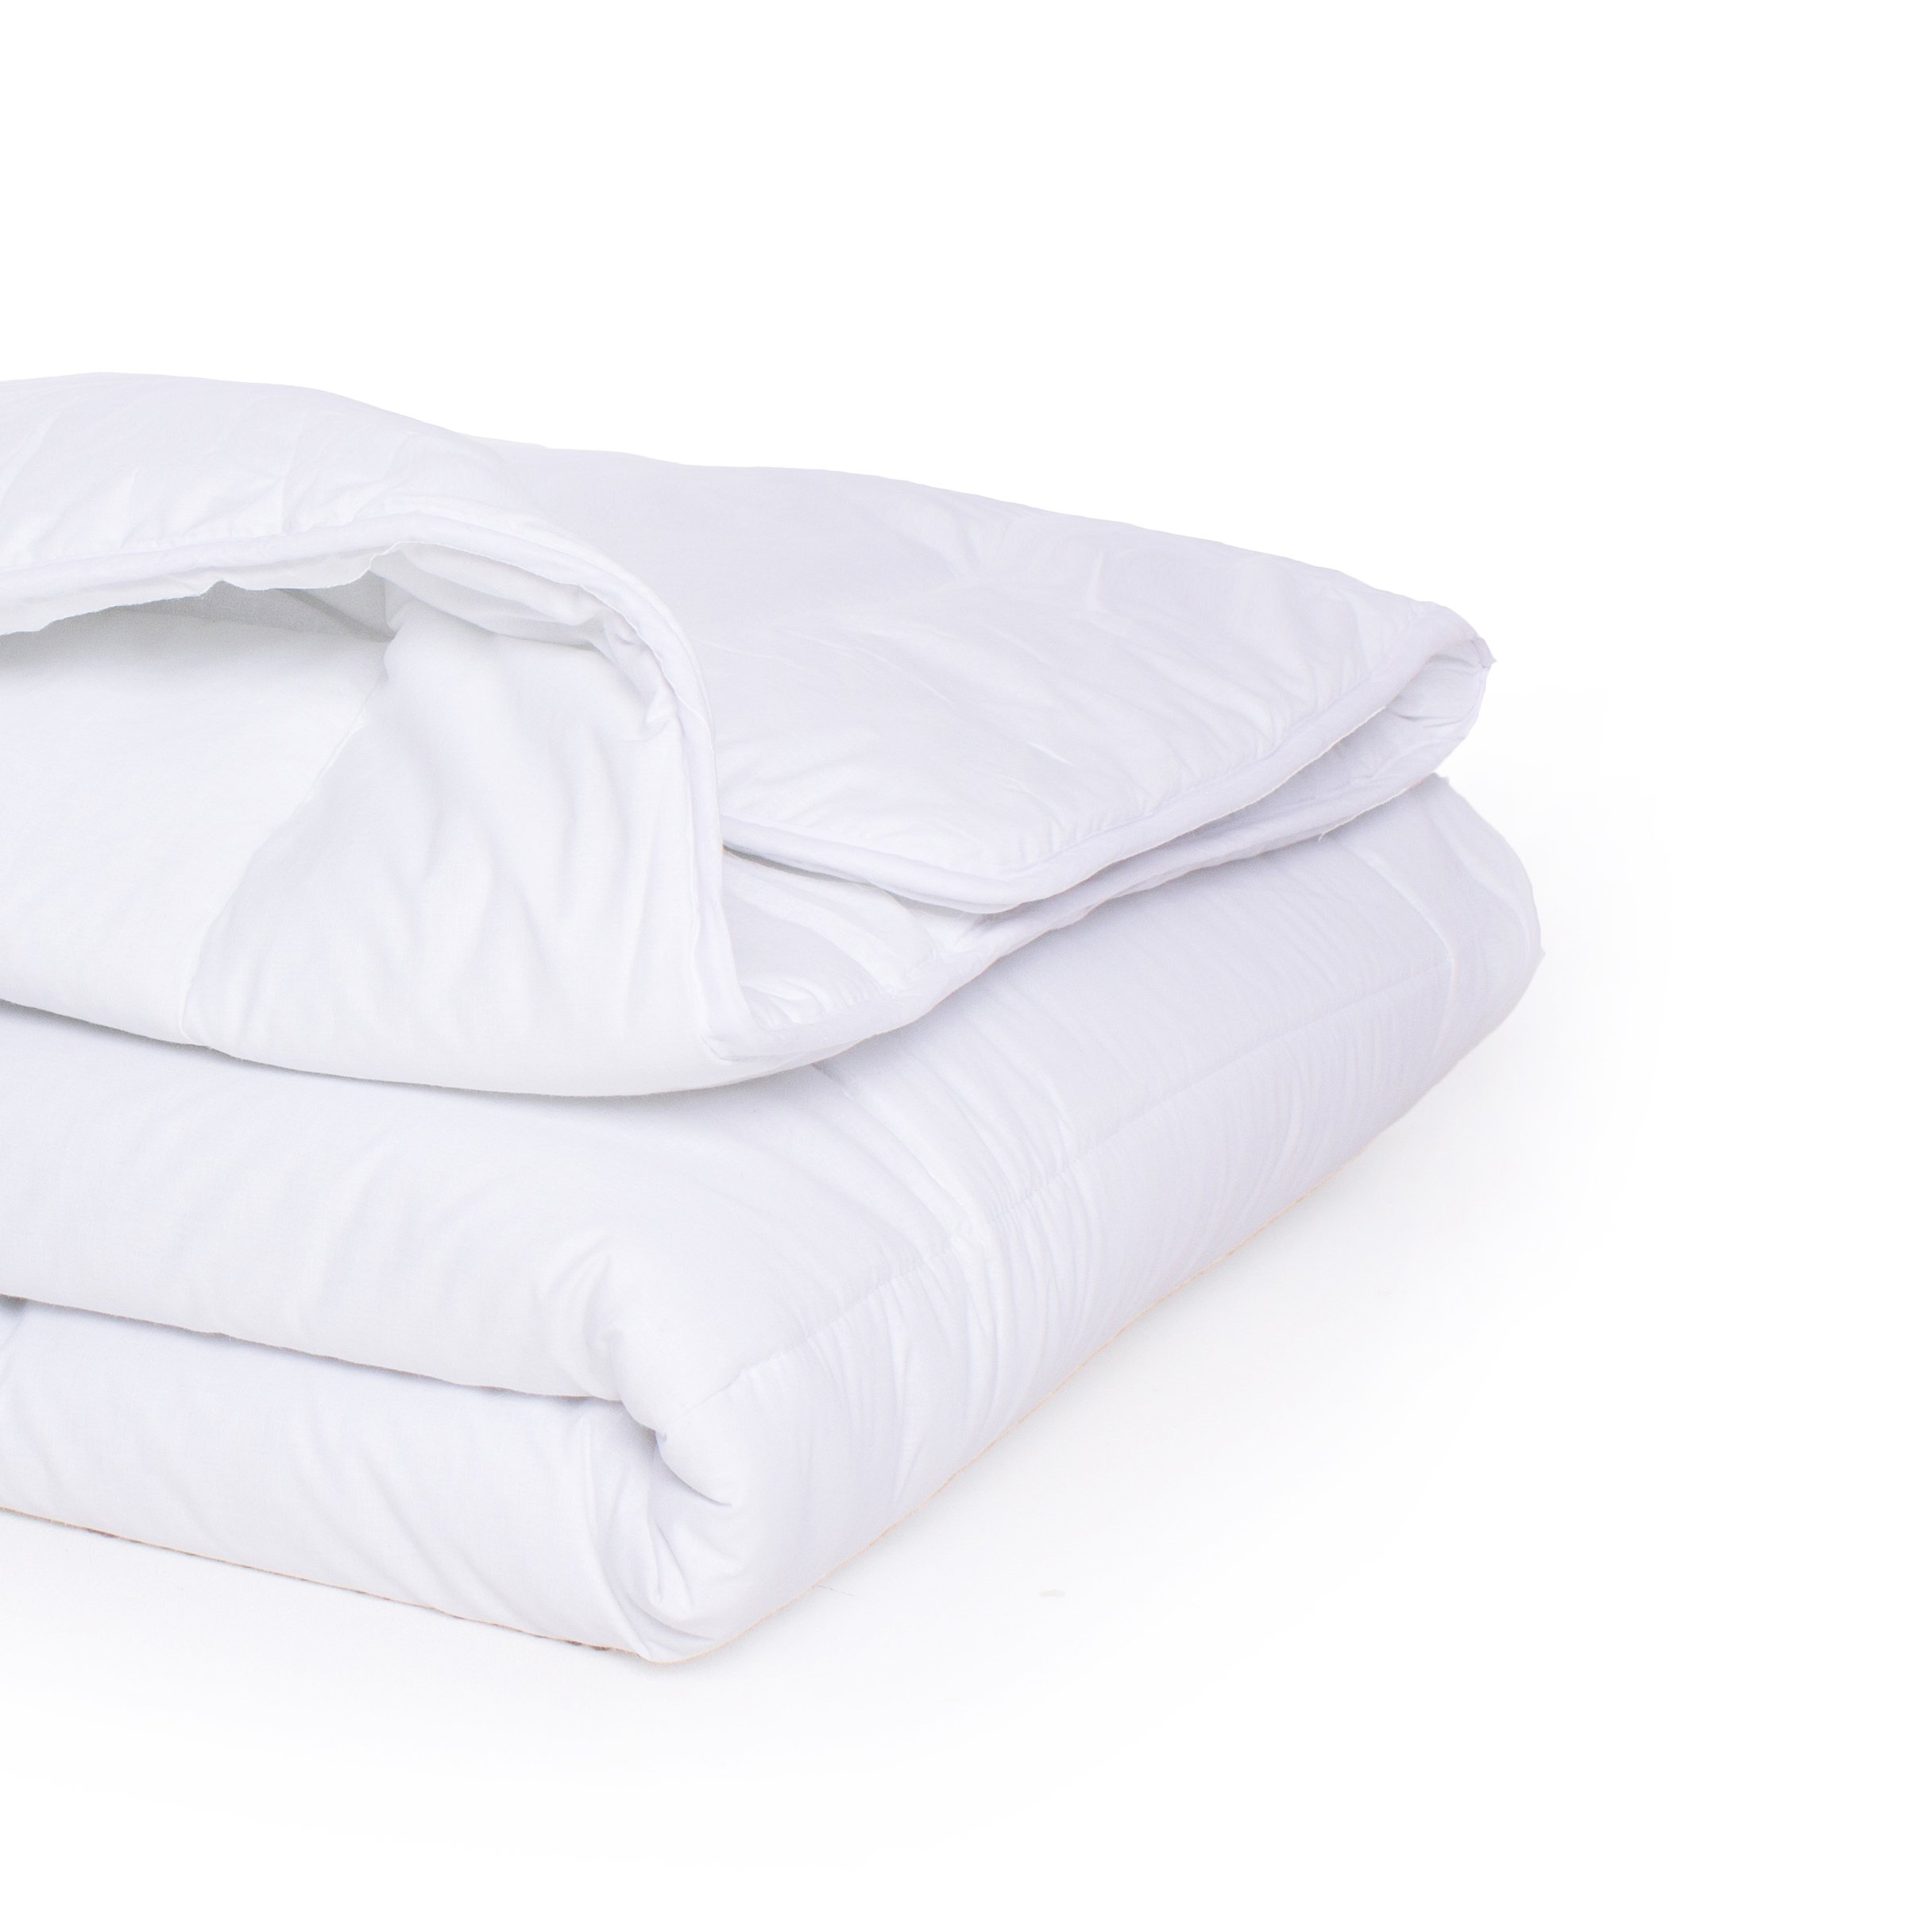 Одеяло шерстяное MirSon Bianco Экстра Премиум №0787, зимнее, 200x220 см, белое - фото 4